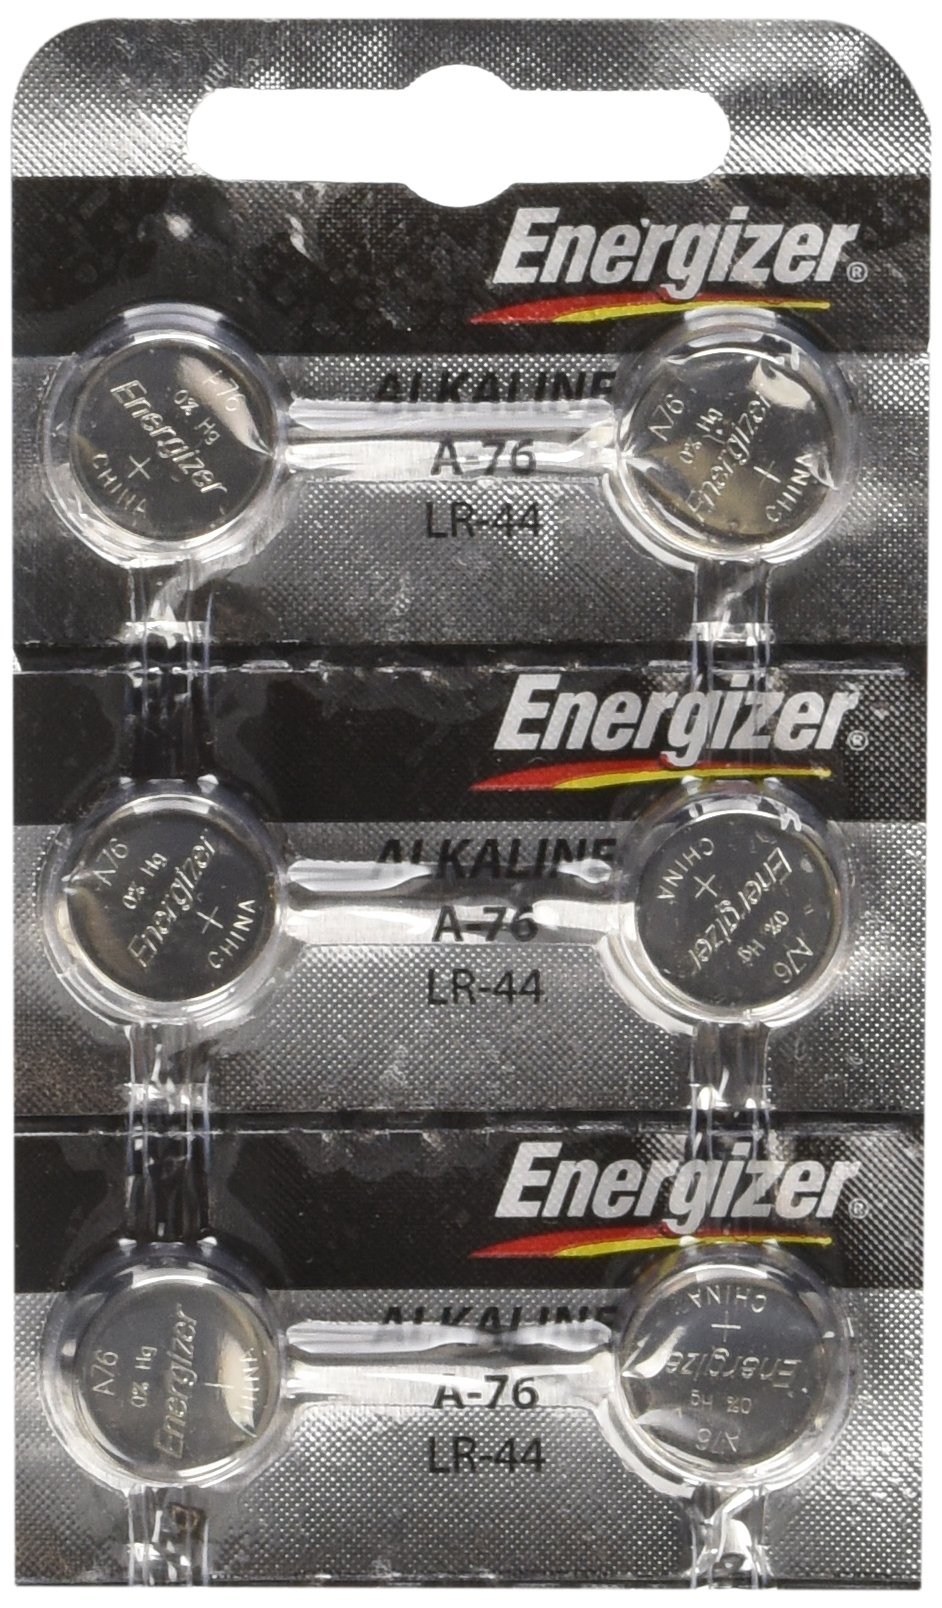 Energizer LR44 1.5V Button Cell Battery x 6 Batteries